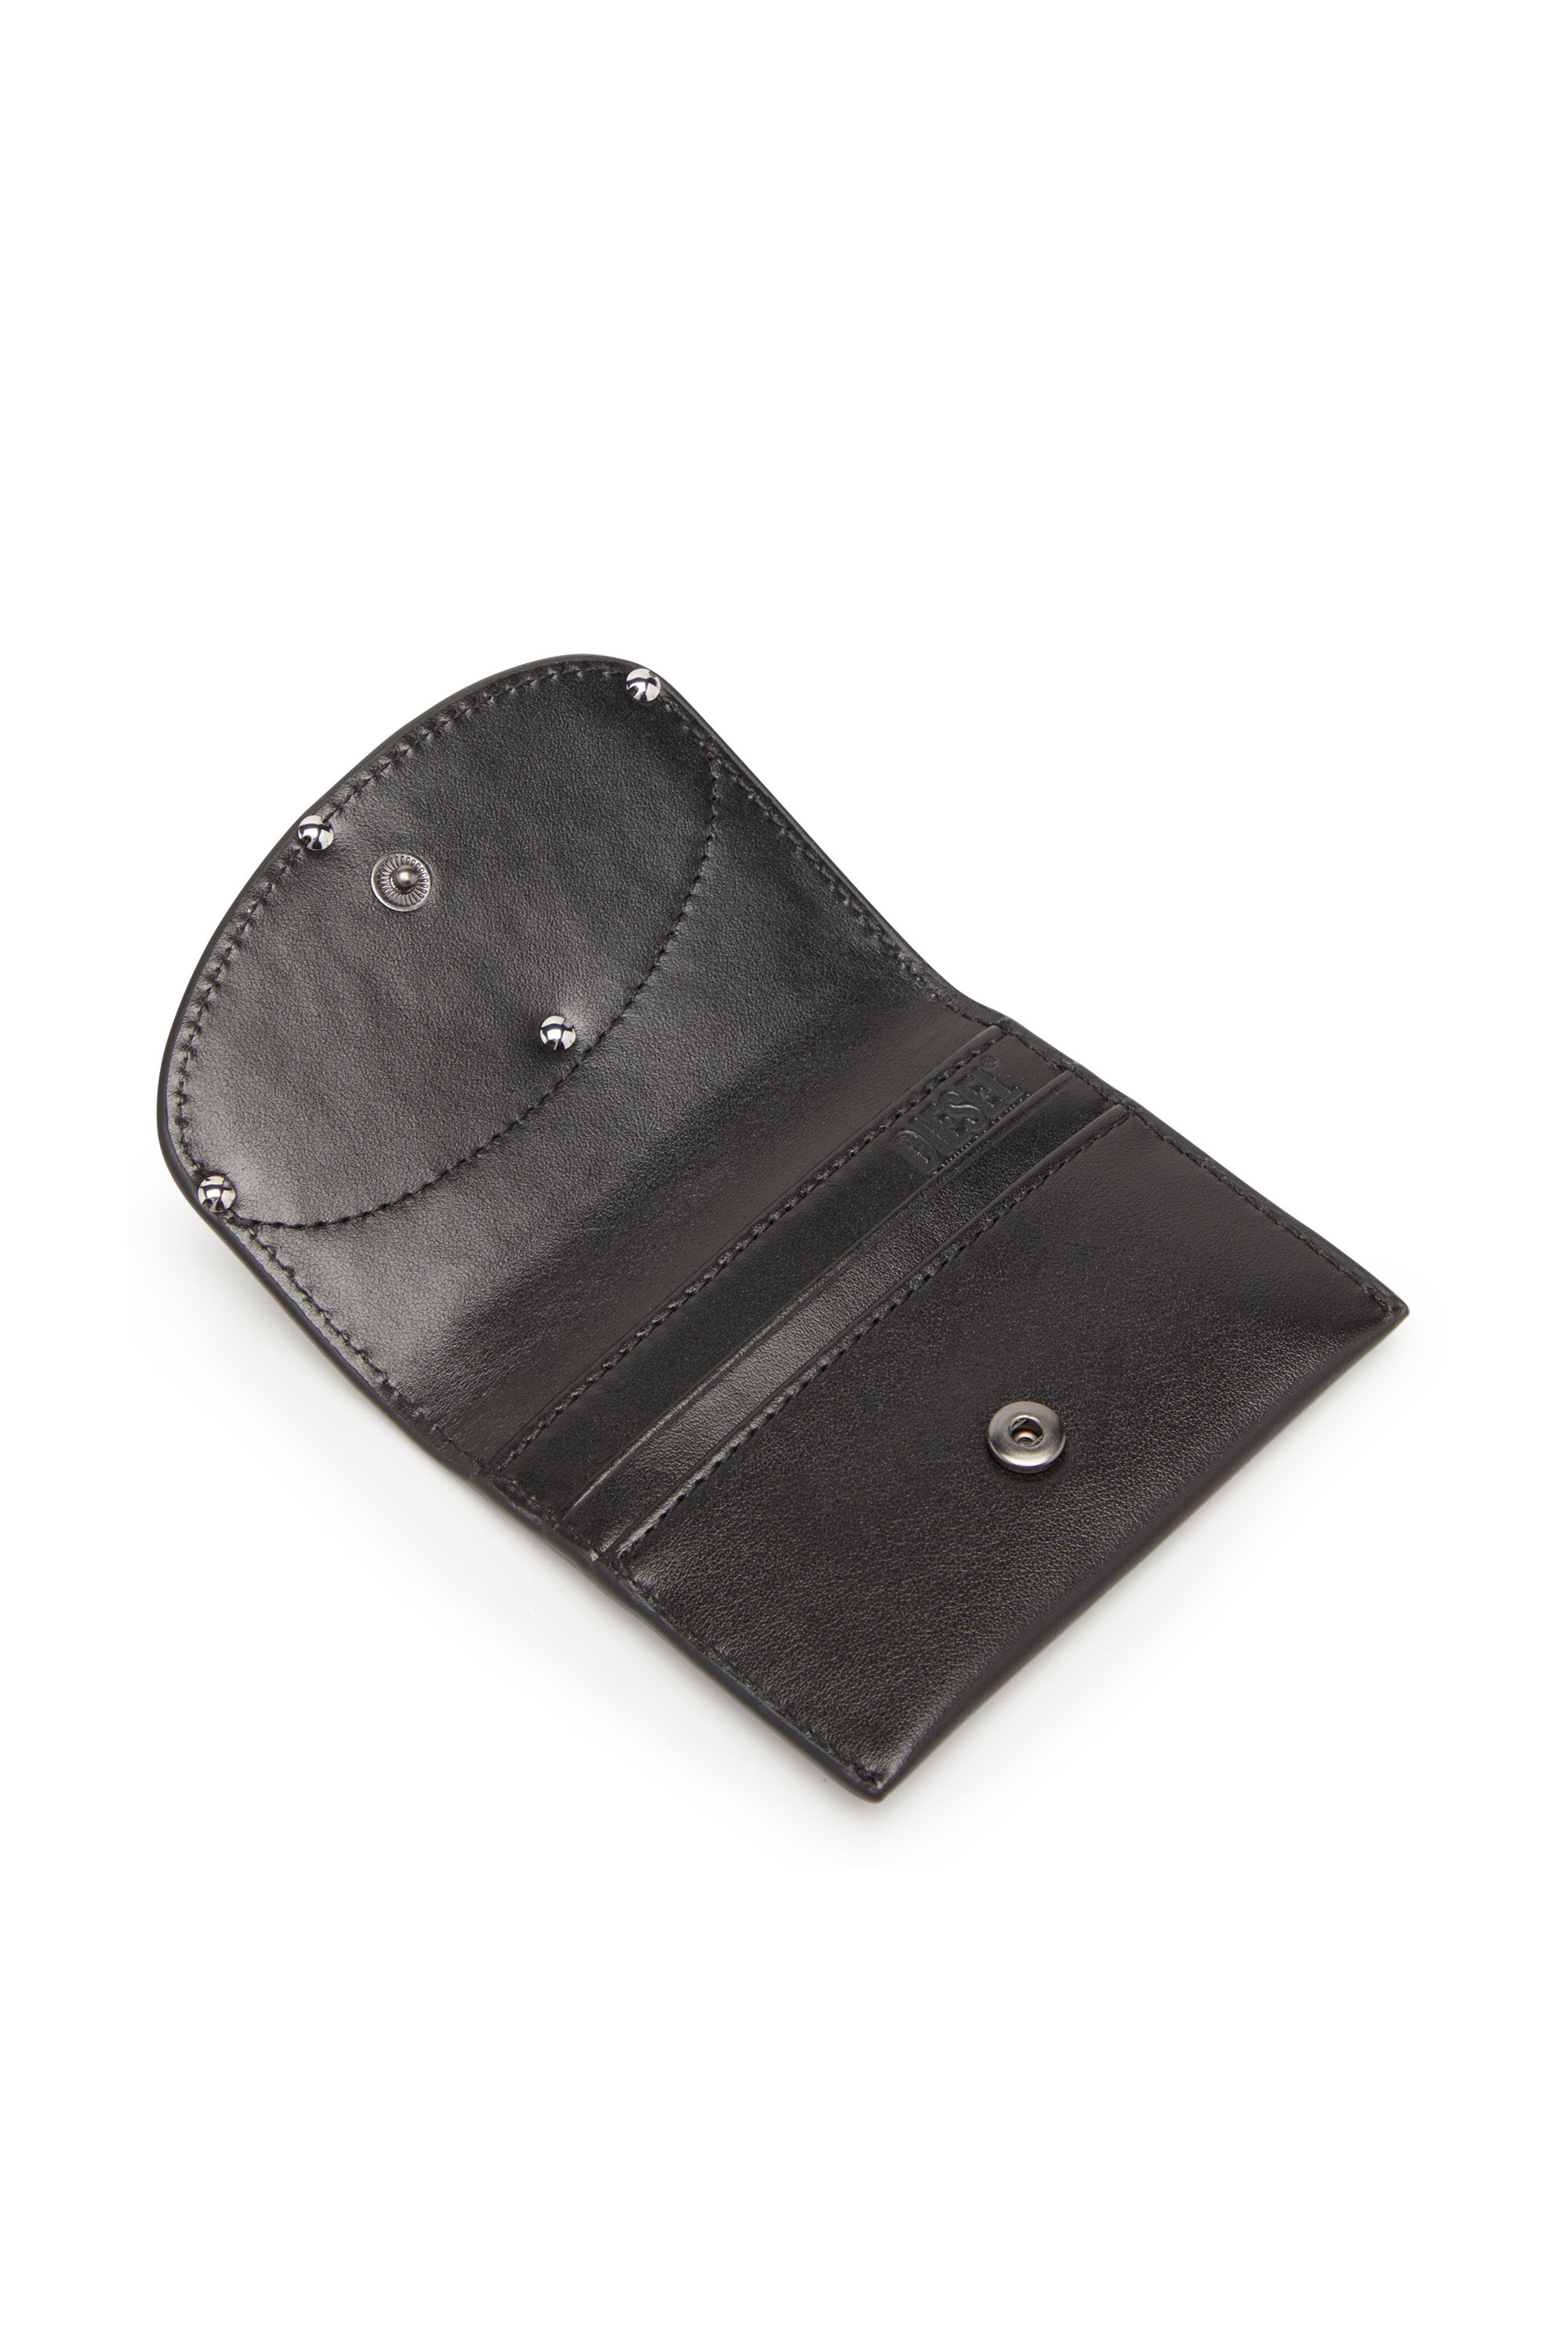 Diesel - HOLI-D CARD HOLDER S, Unisex Bi-fold card holder in smooth leather in Black - Image 4